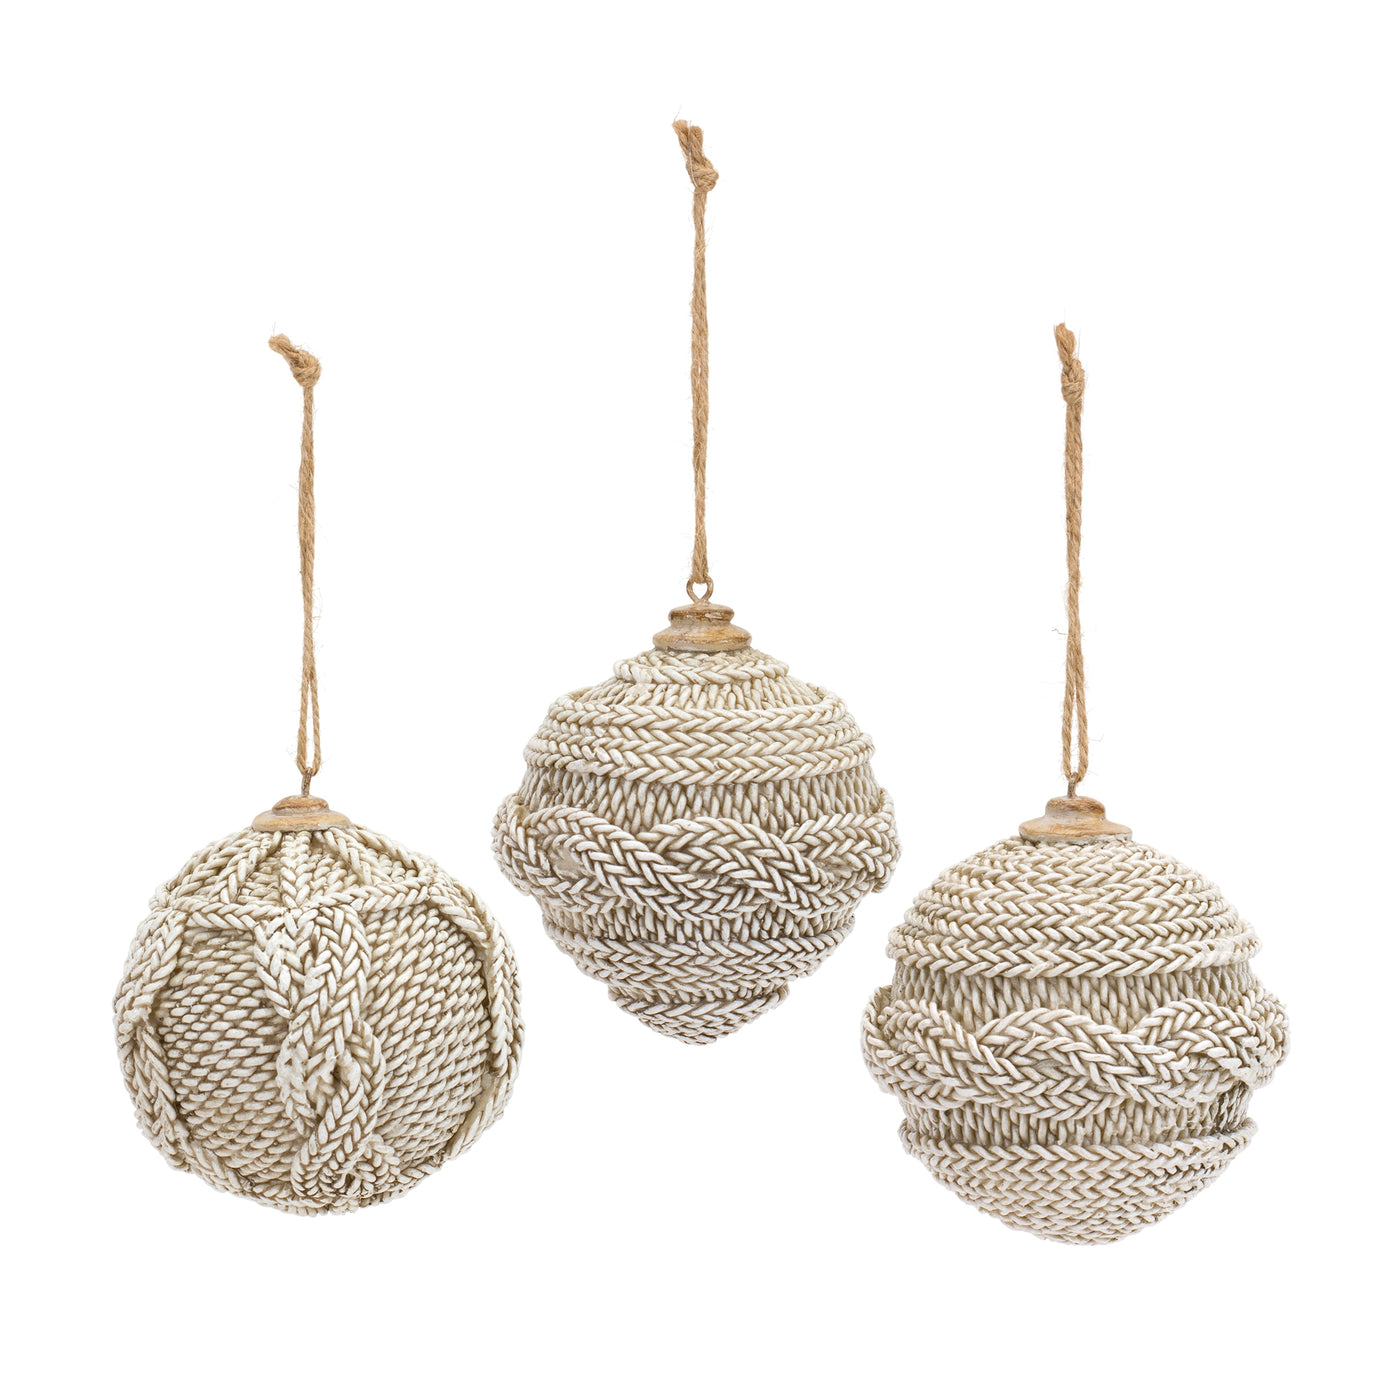 Resin Knit Ornaments